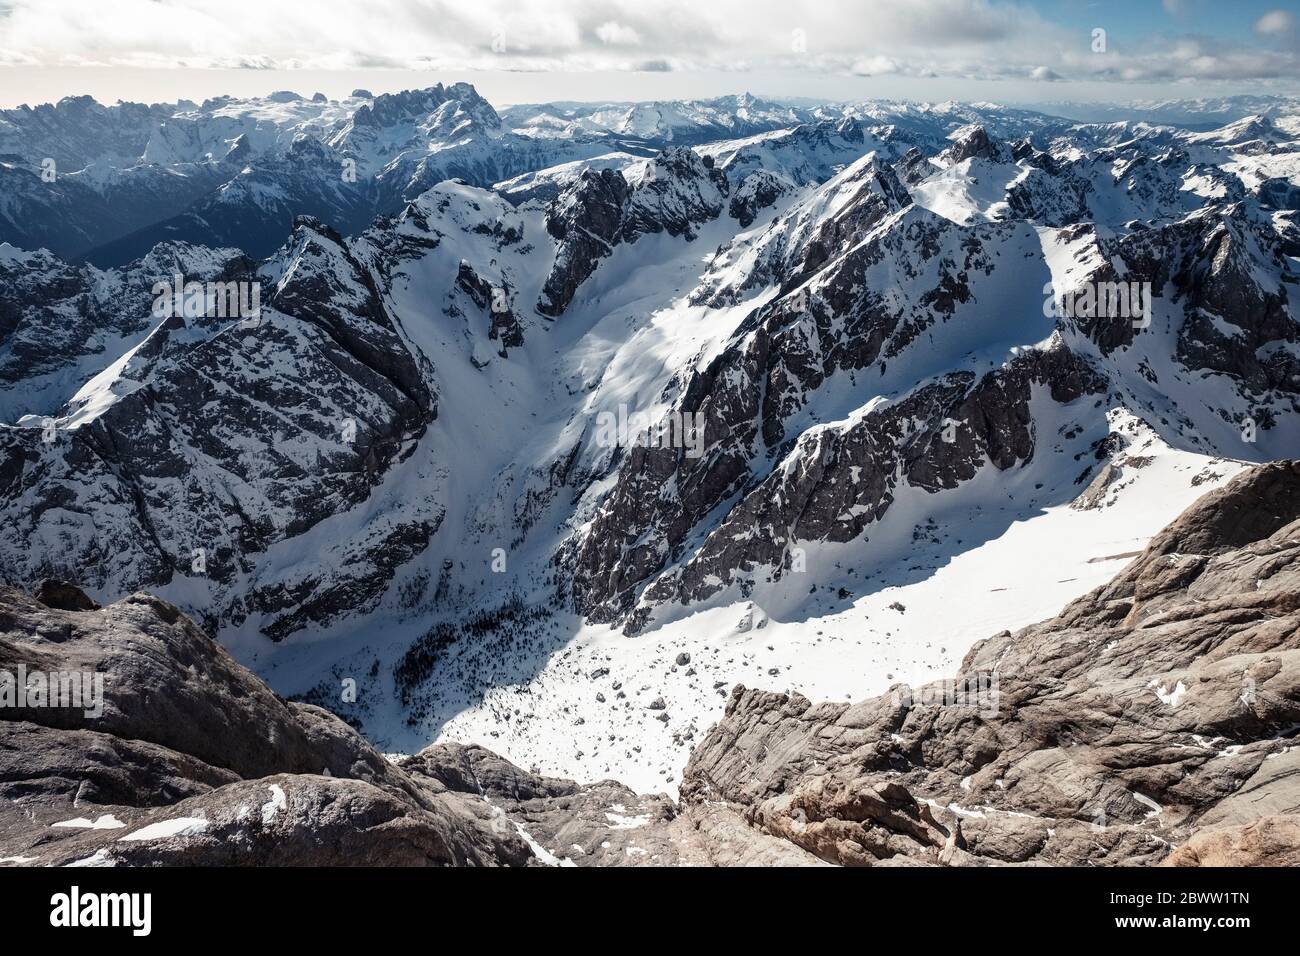 Italy, Trentino, Scenic view from summit of Marmolada mountain Stock Photo